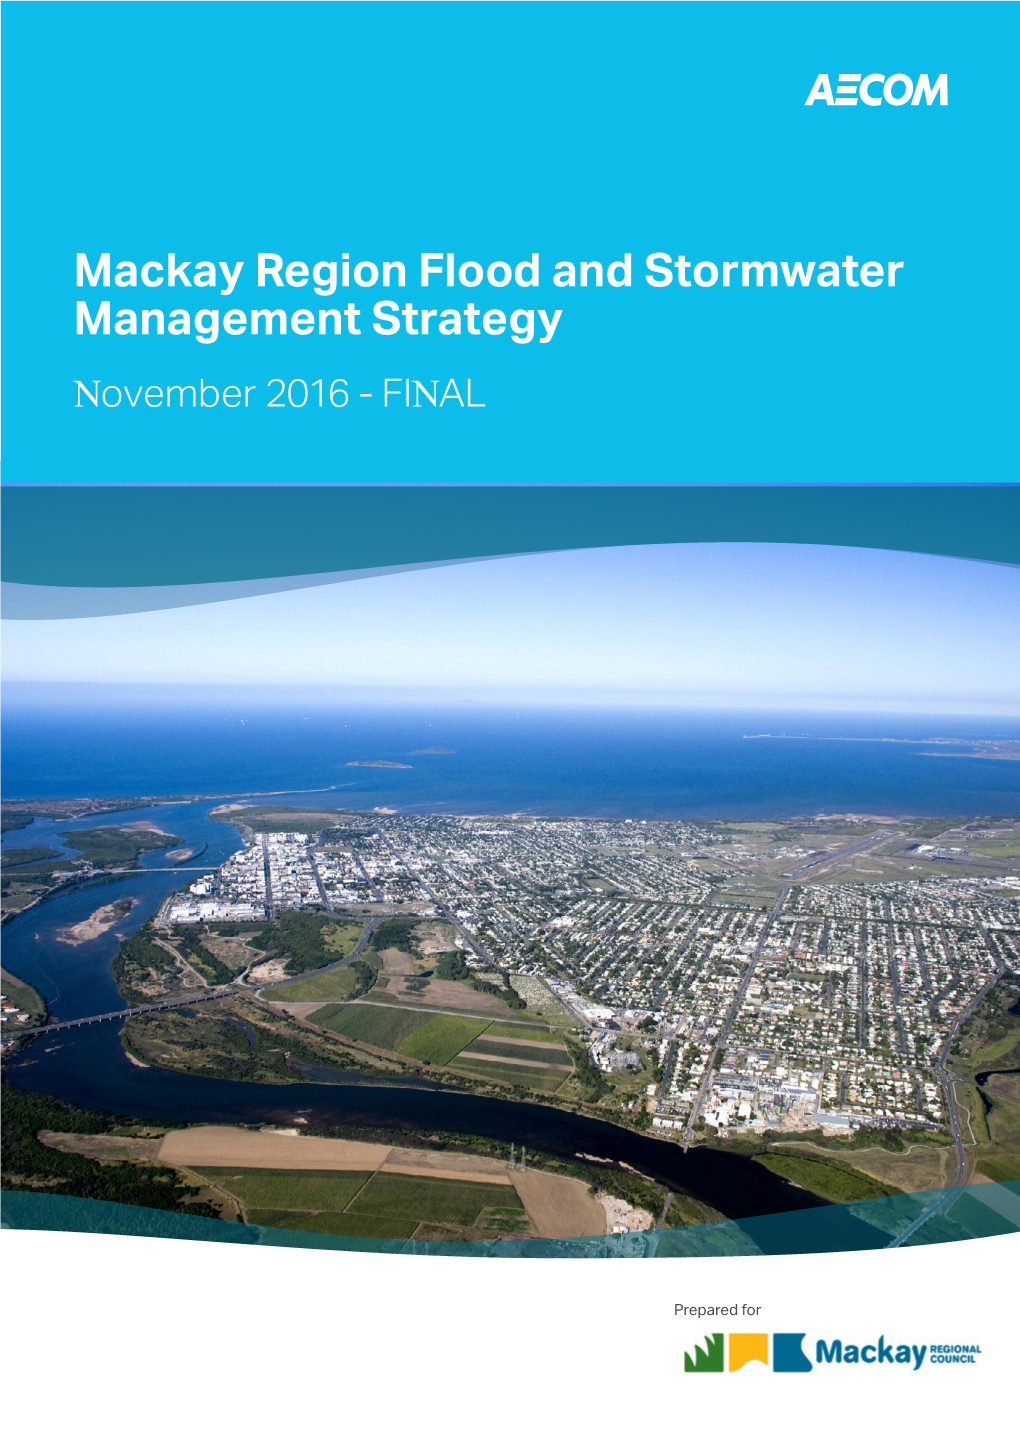 Mackay Region Flood and Stormwater Management Strategy N N Ovember 2016 - FI AL